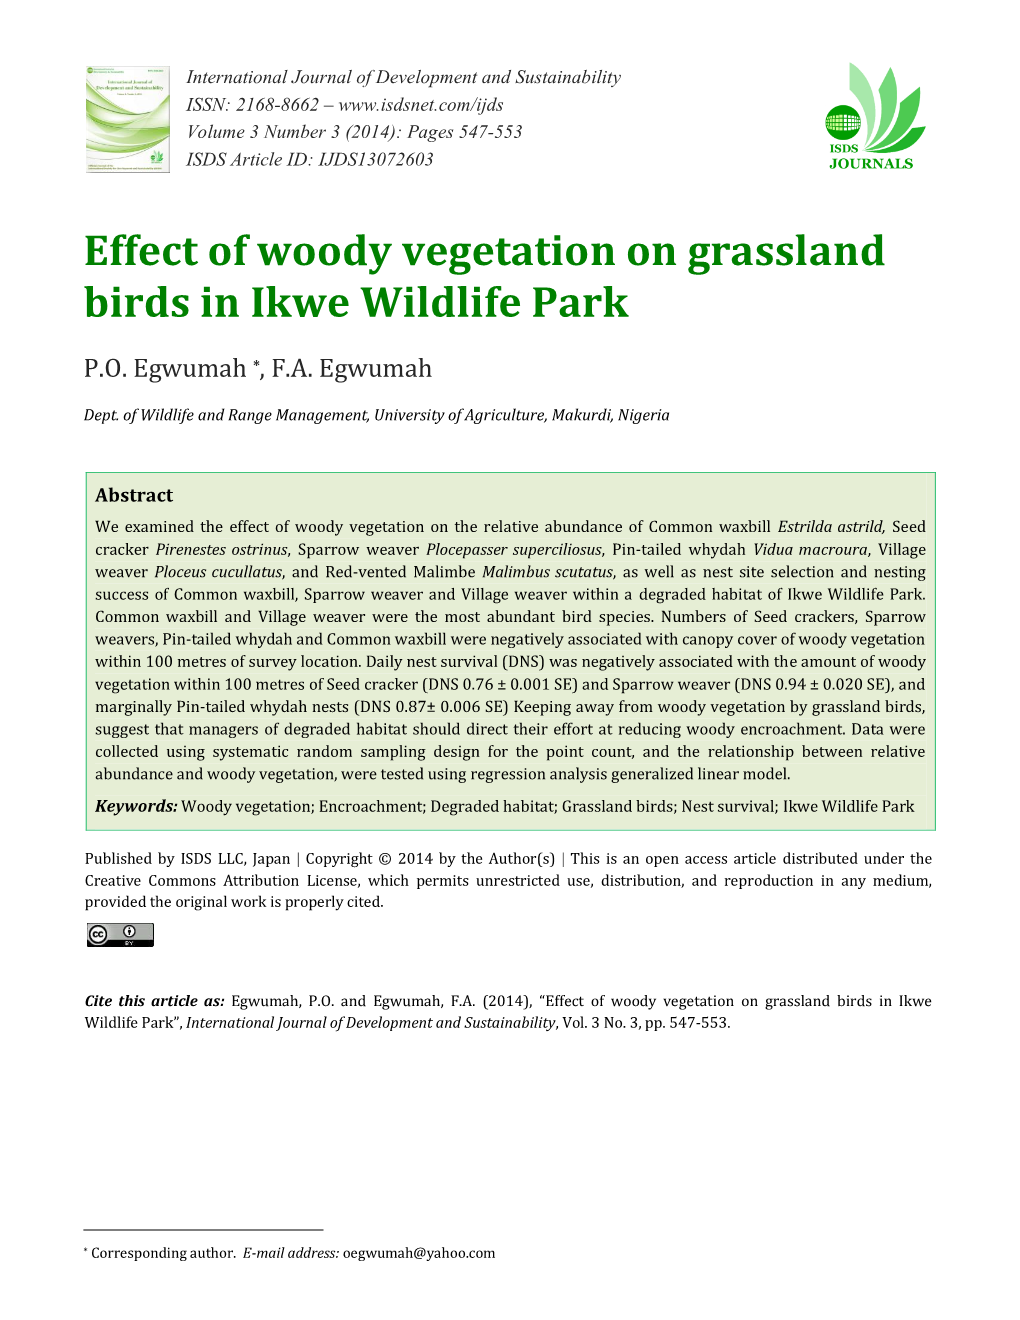 Effect of Woody Vegetation on Grassland Birds in Ikwe Wildlife Park